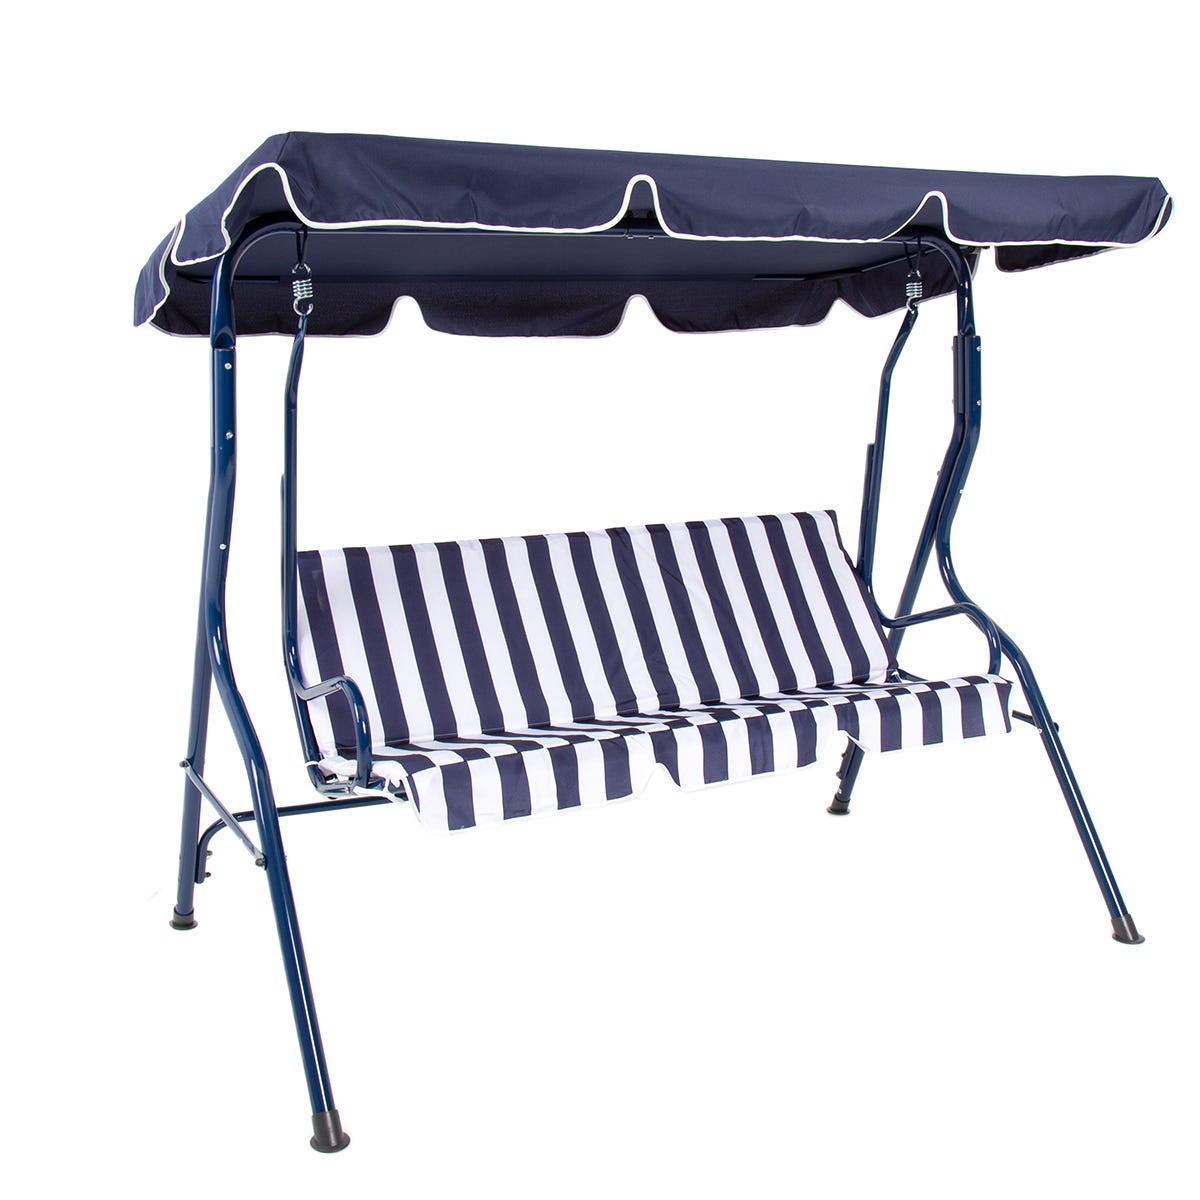 Charles Bentley 23 Seater Garden Swing Seat Hammock Chair Stripe Plain Design Blue